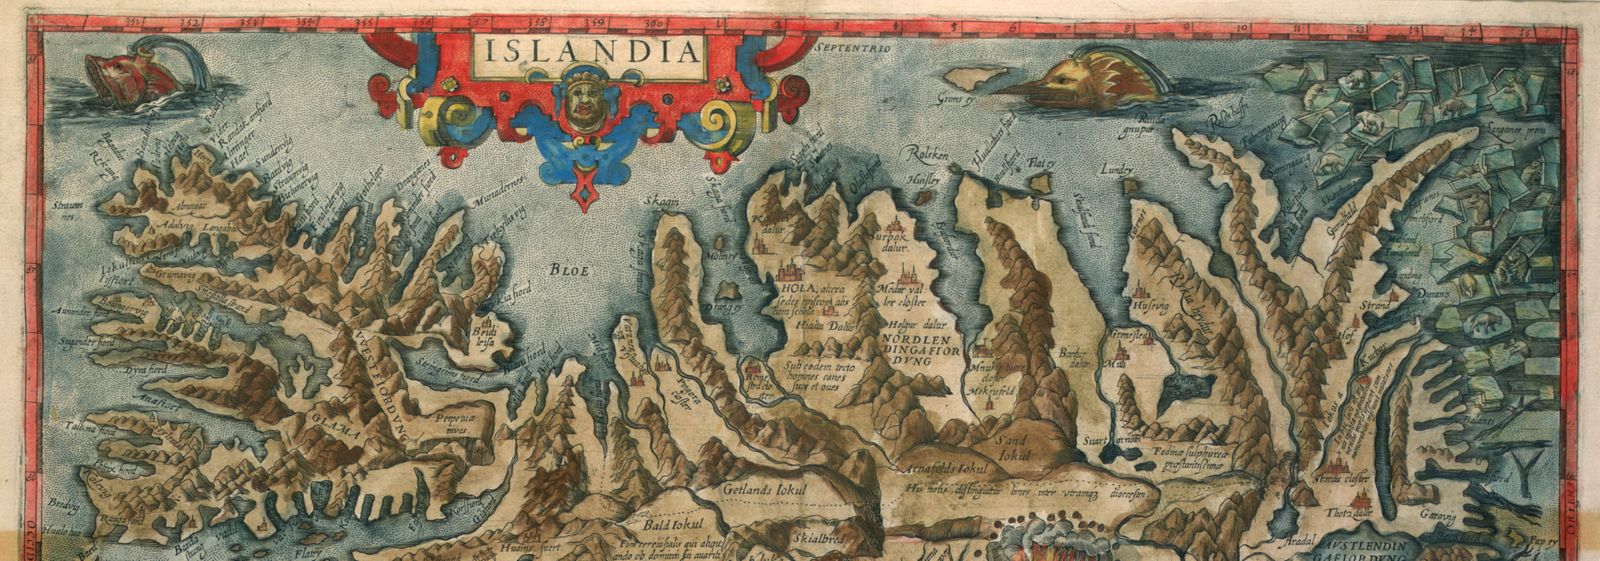 Íslandskort Guðbrands biskups Þorlákssonar | 1590